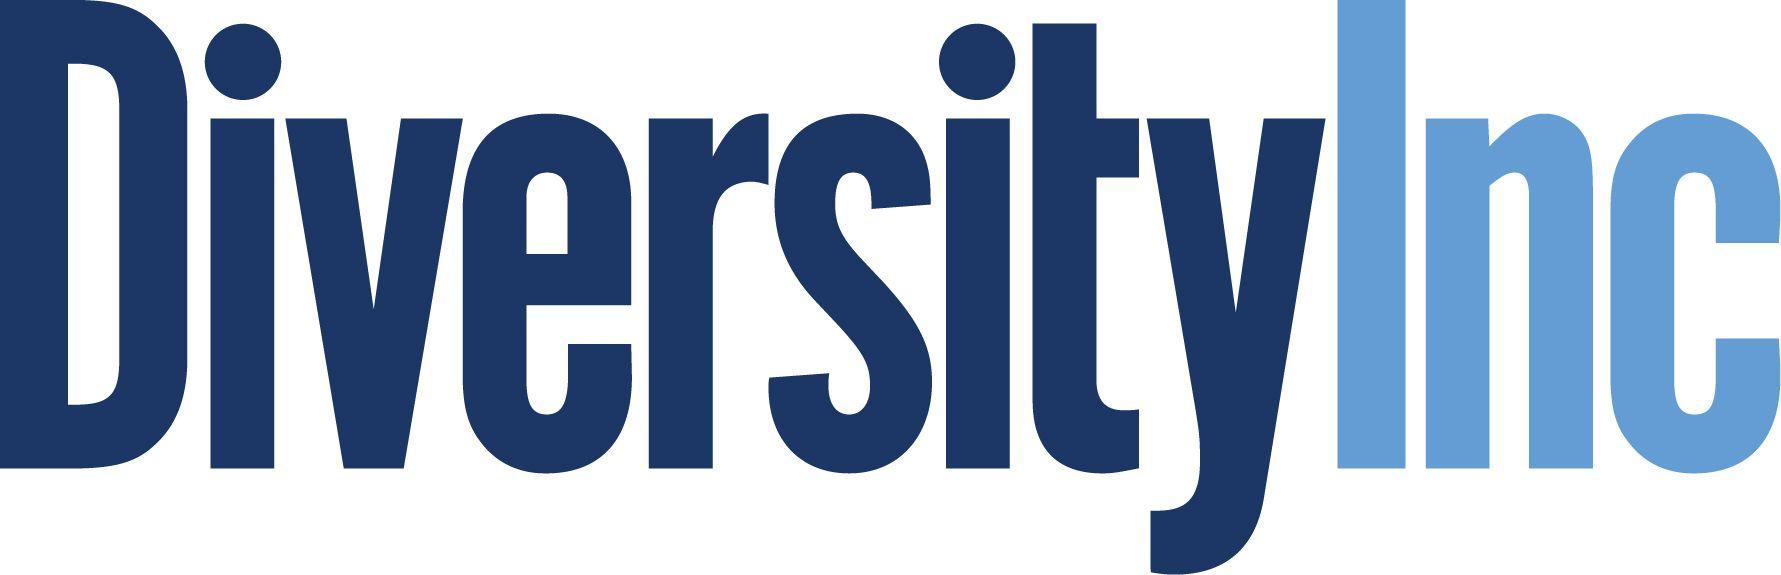 DiversityInc Logo - 9 Best Photos of DiversityInc Top 50 2014 Logo - Diversity Inc Top ...